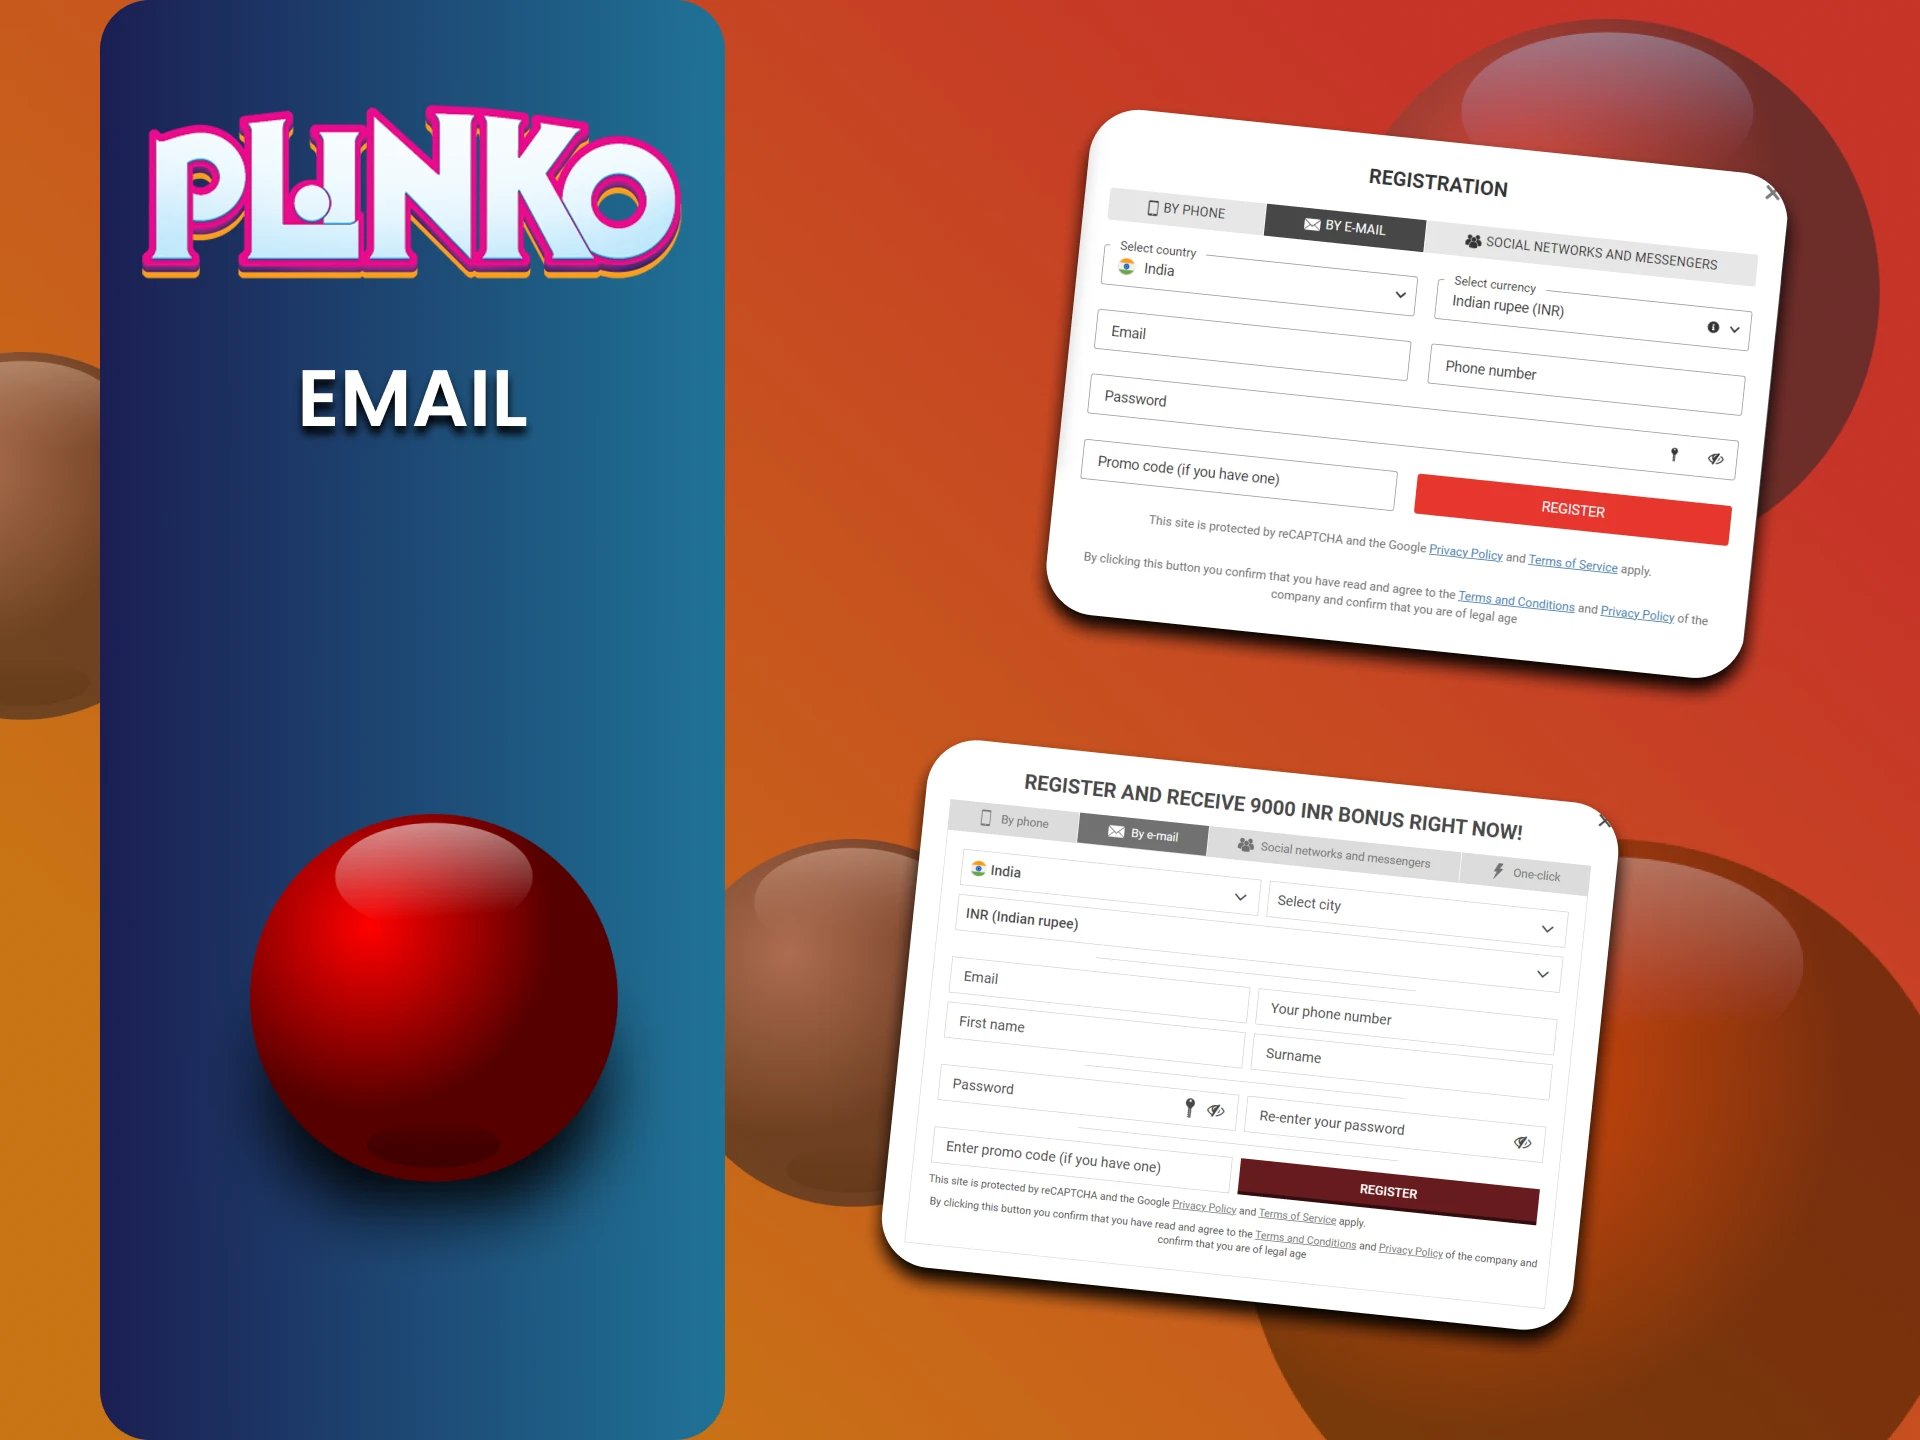 Select the registration method via Email, to play Plinko